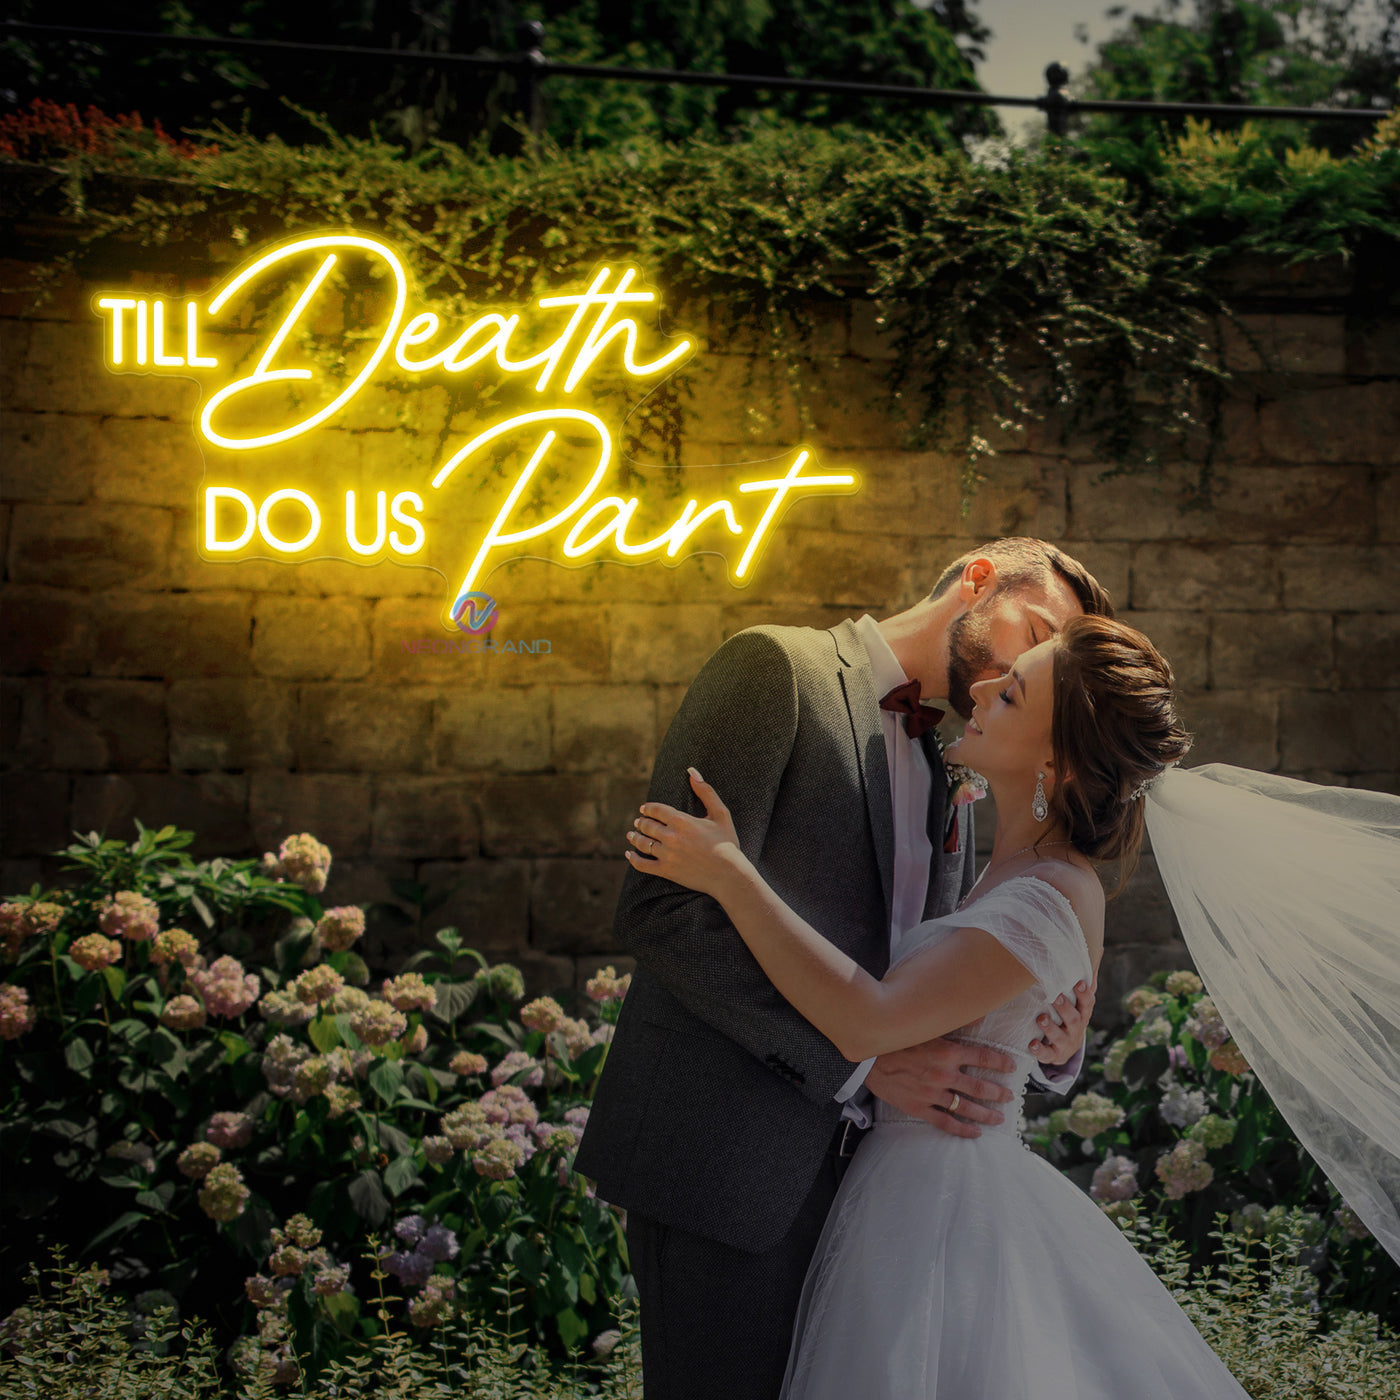 Til Death Do Us Part Neon Sign Wedding Led Light yellow